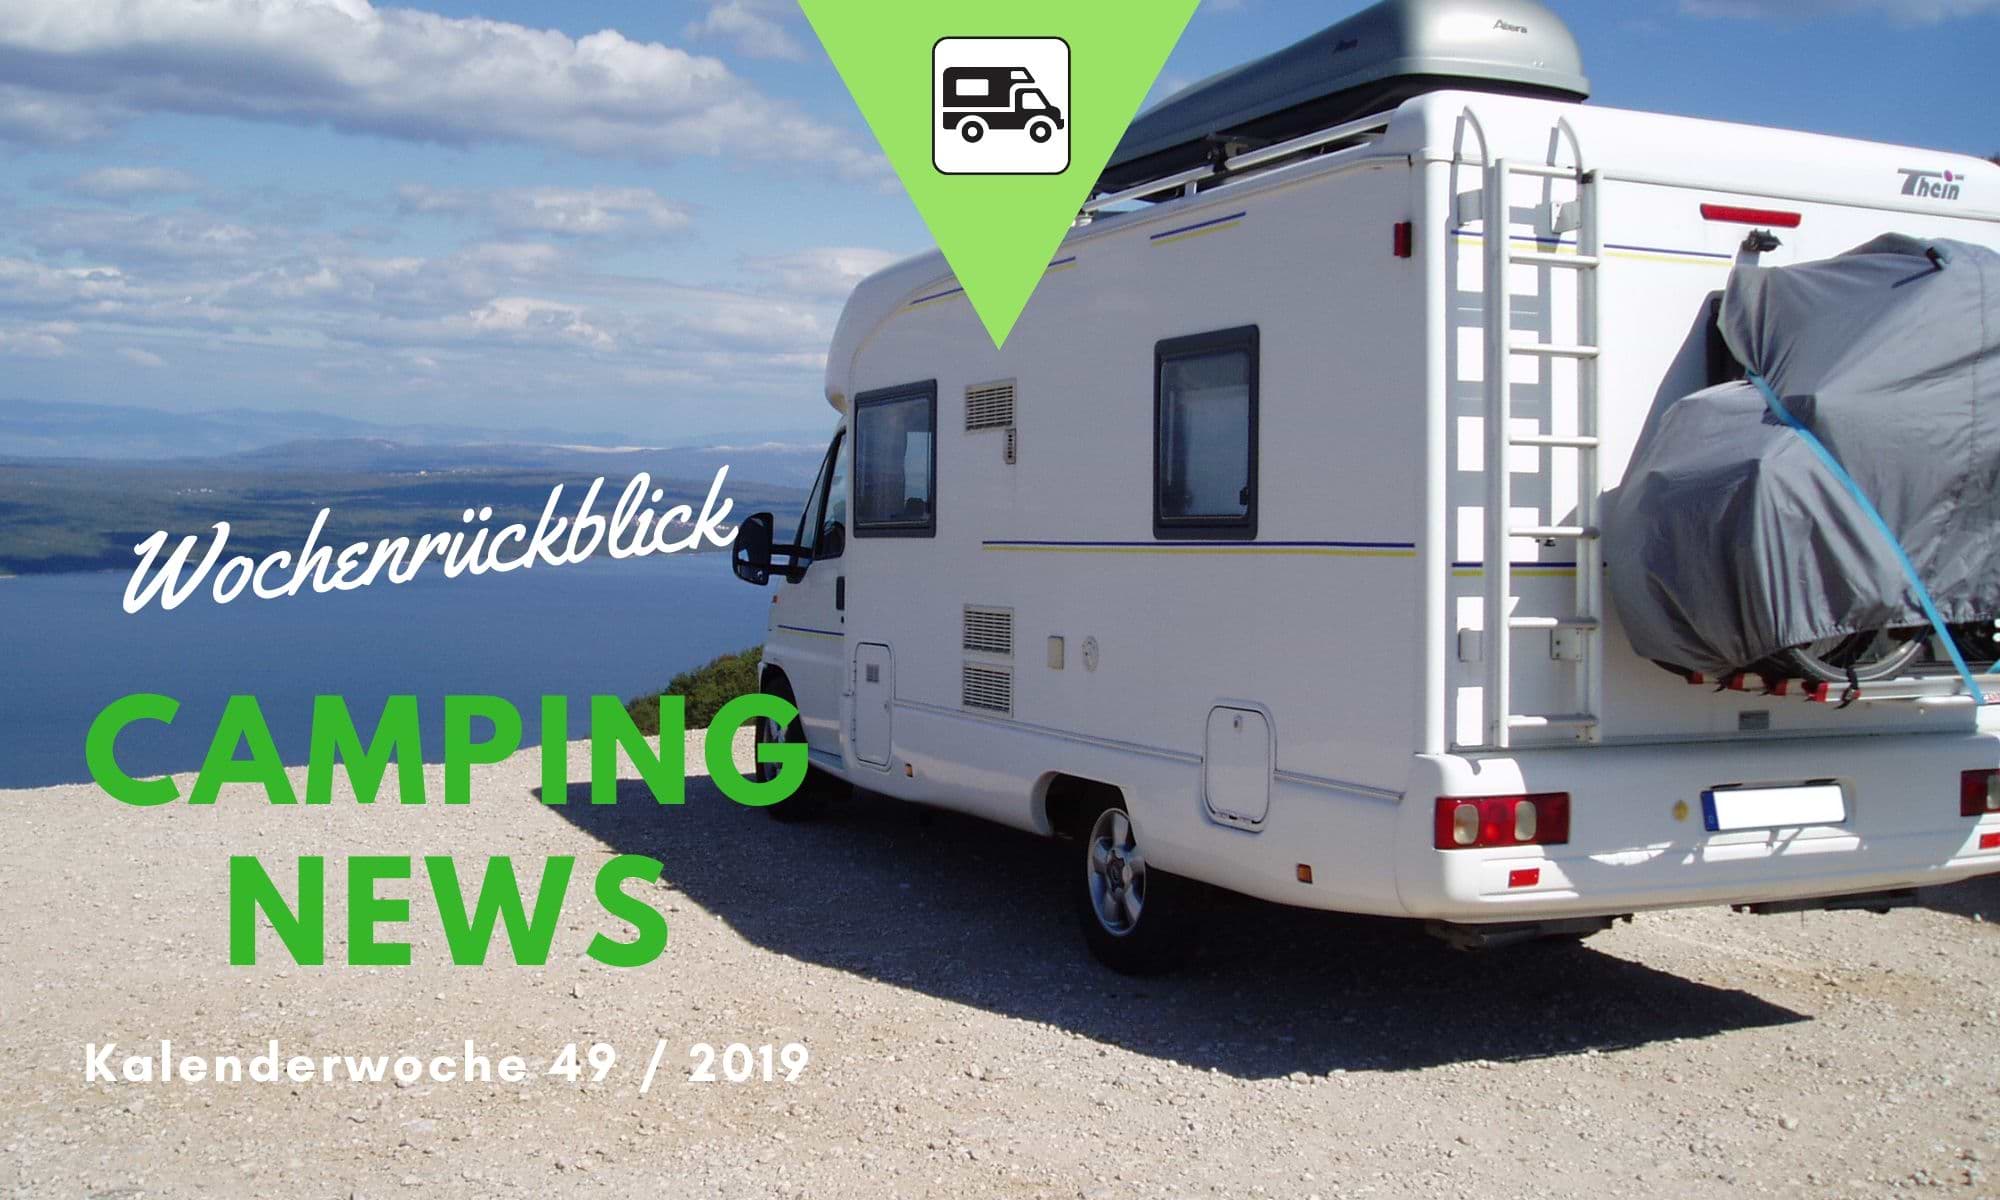 Wochenrückblick Camping News KW49-2019